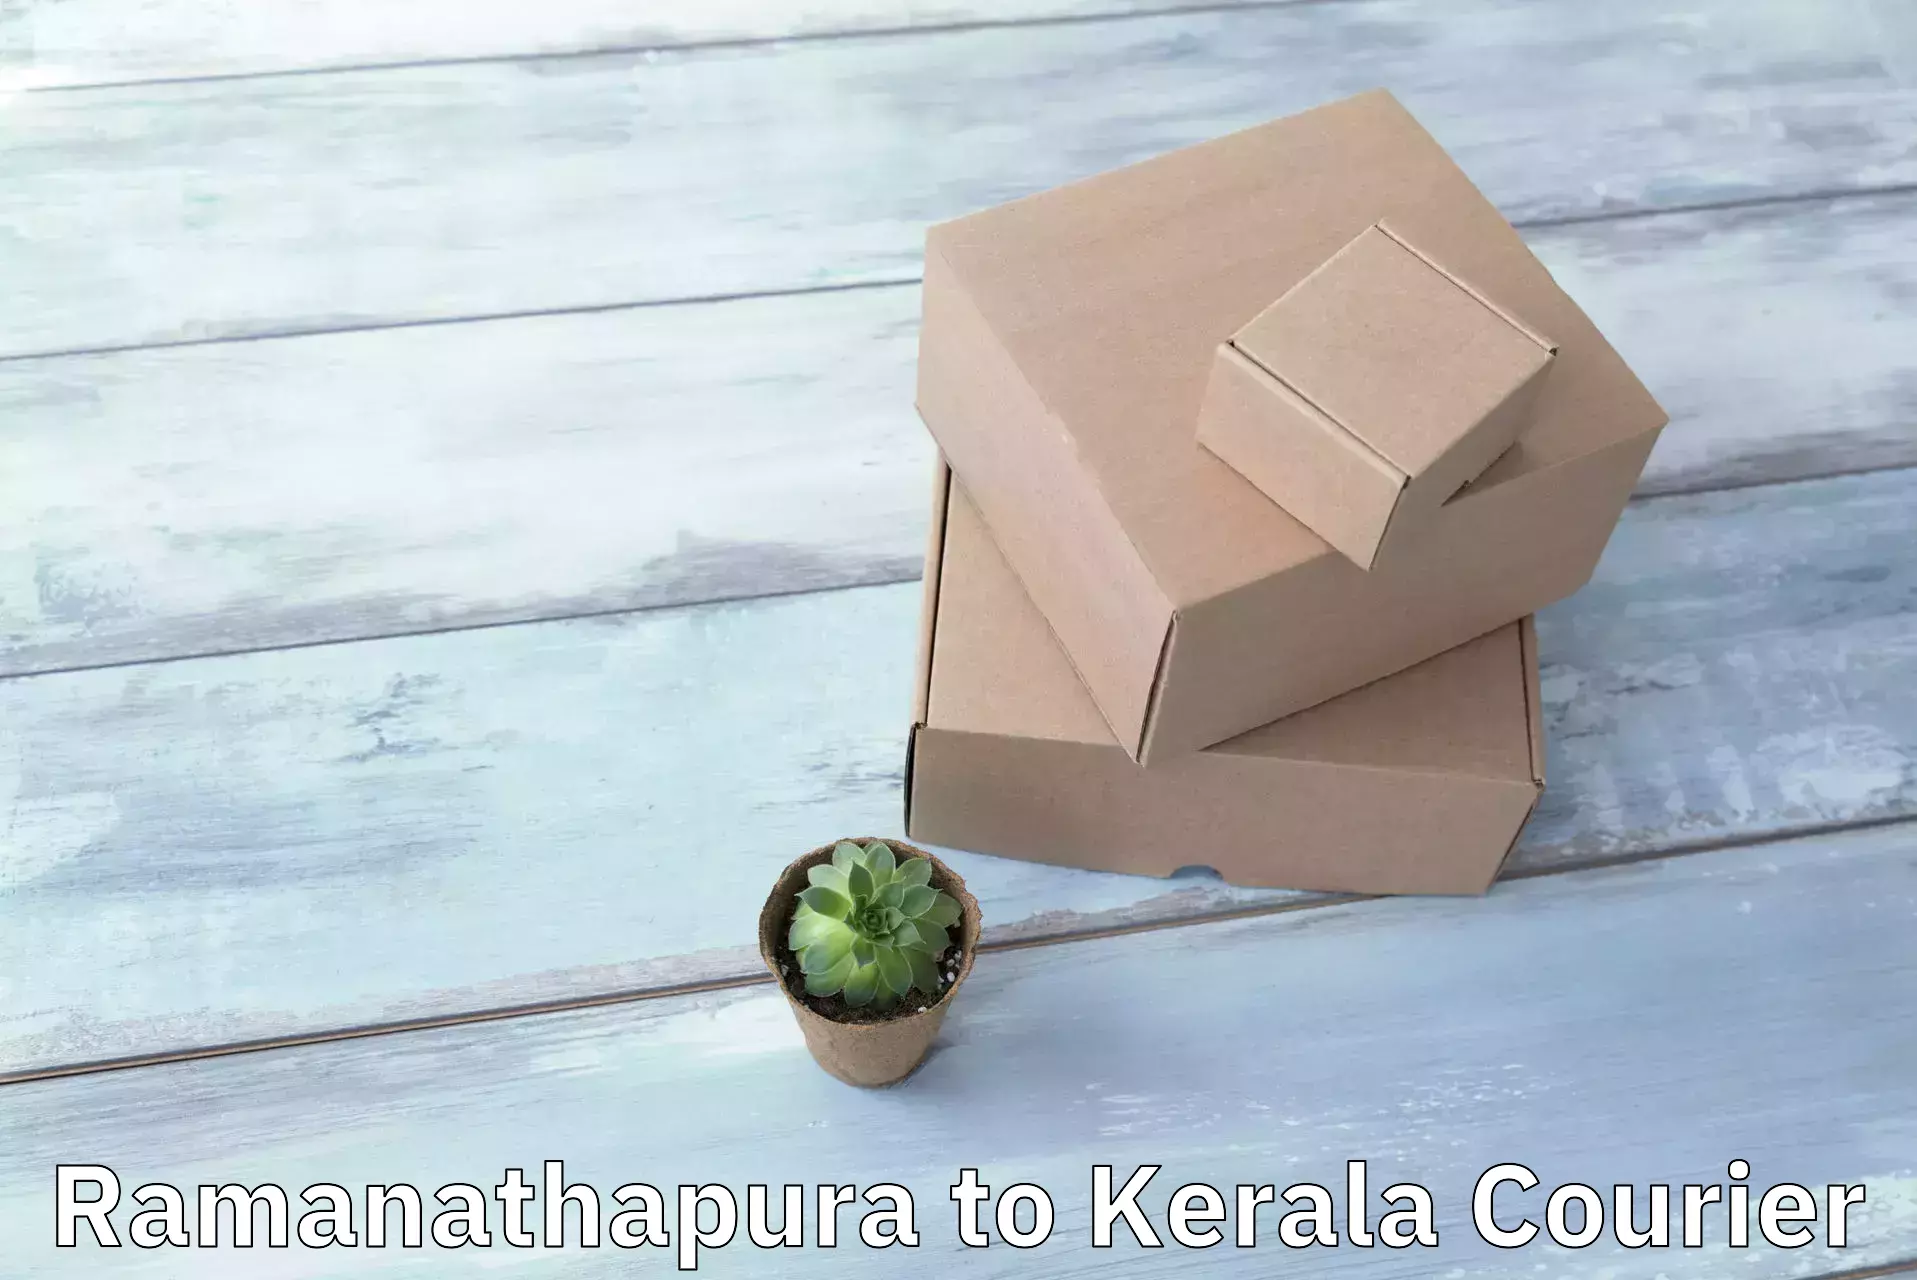 Modern courier technology Ramanathapura to Kerala